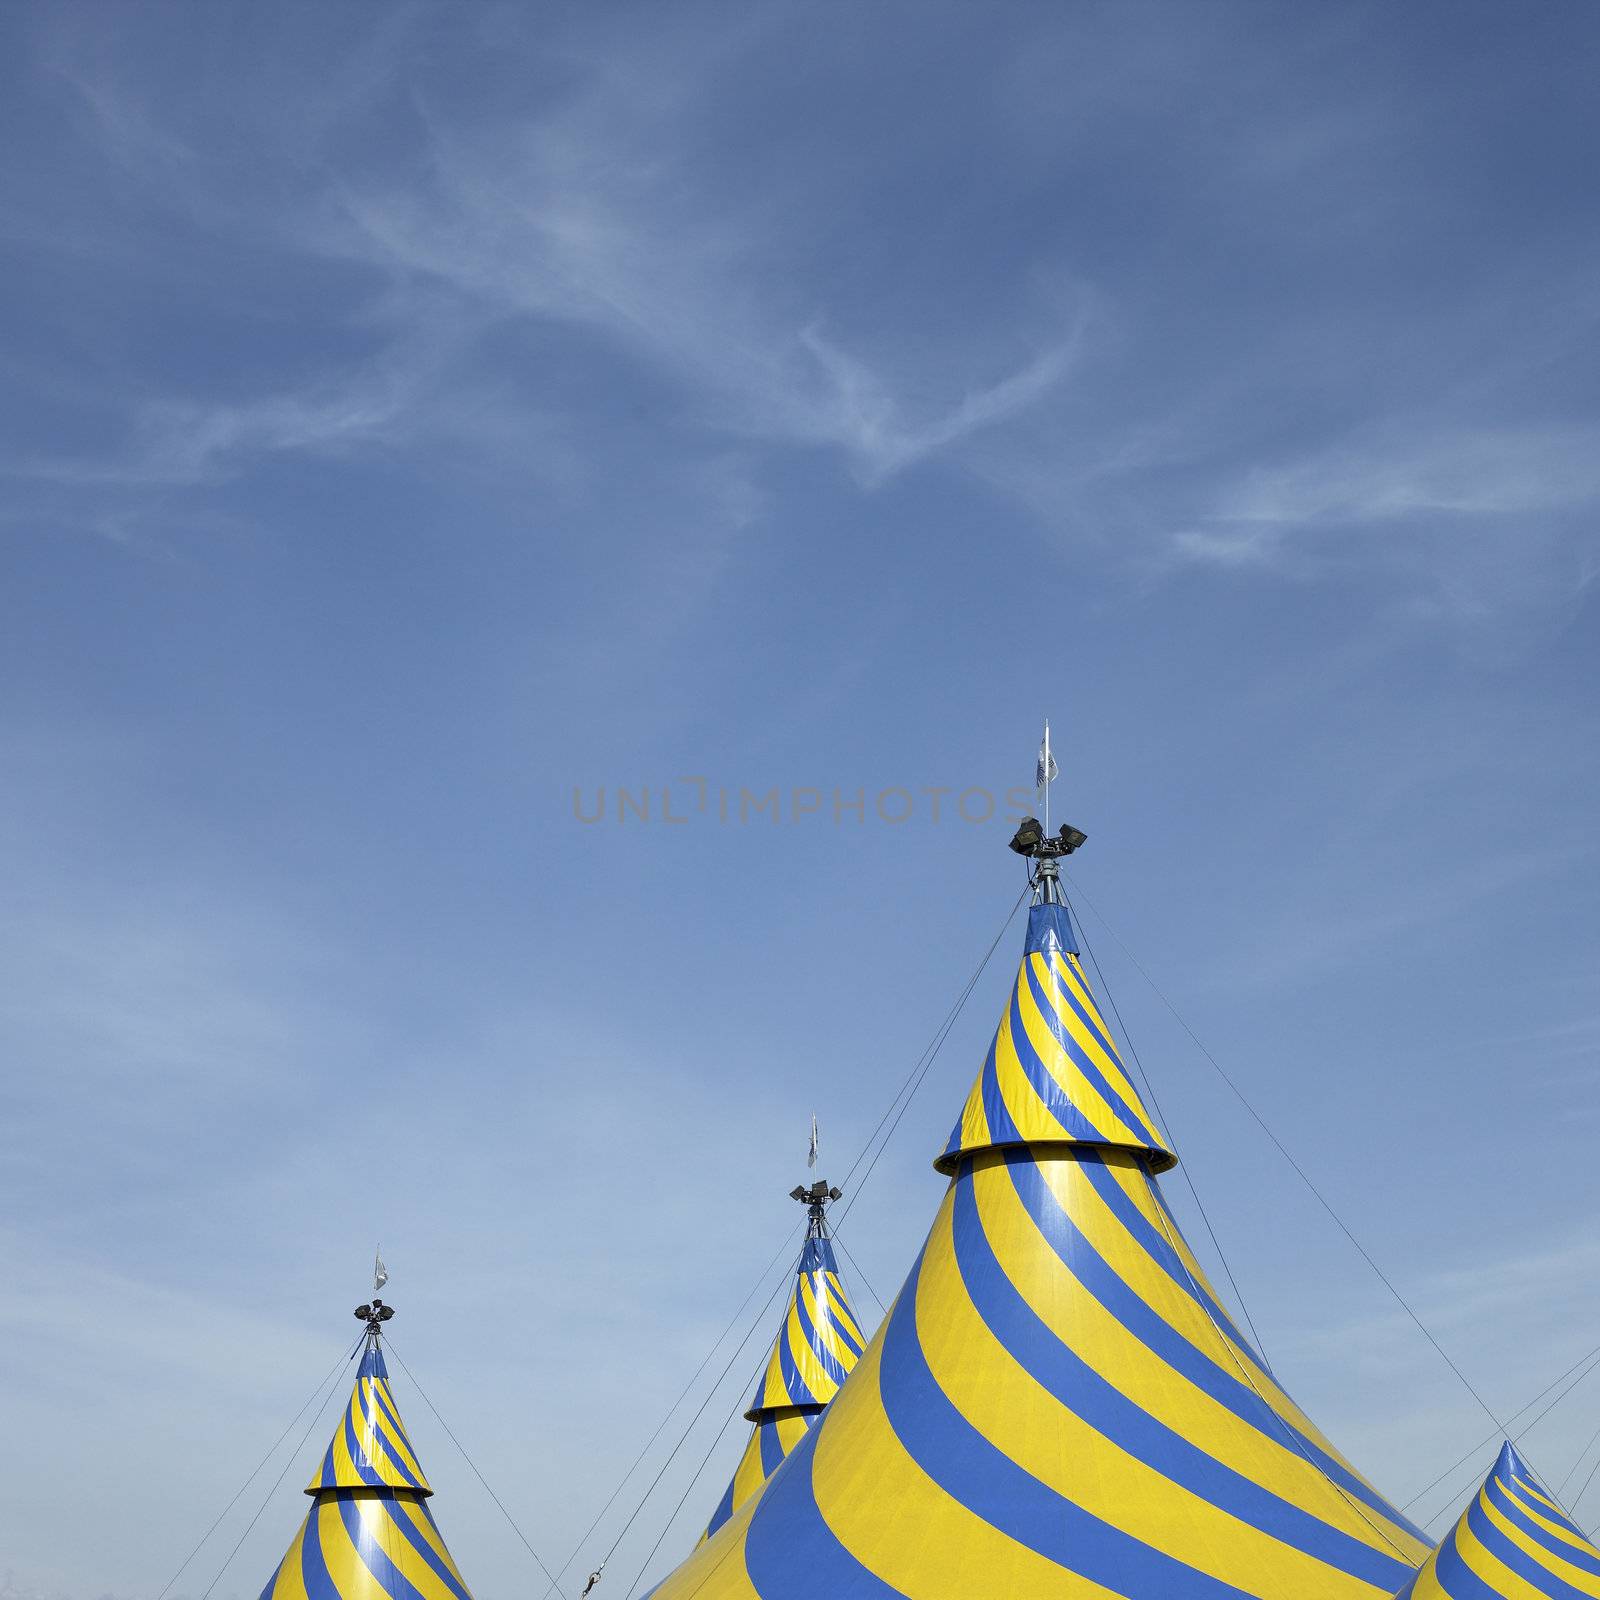 Cirque du Soleil Tent